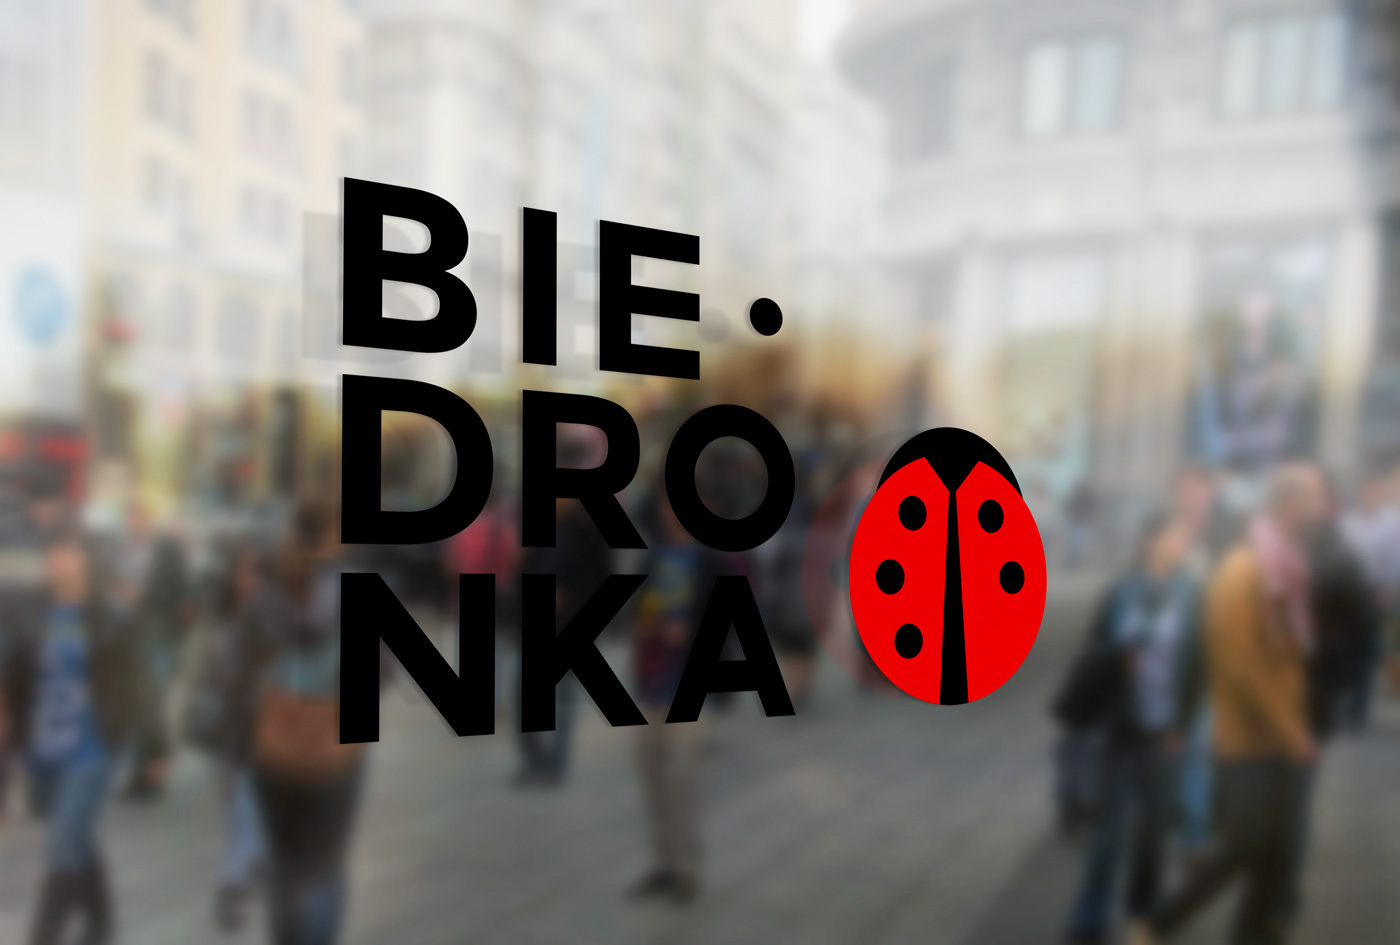 Biedronka conceptual rebranding rebiedring Web advert logo